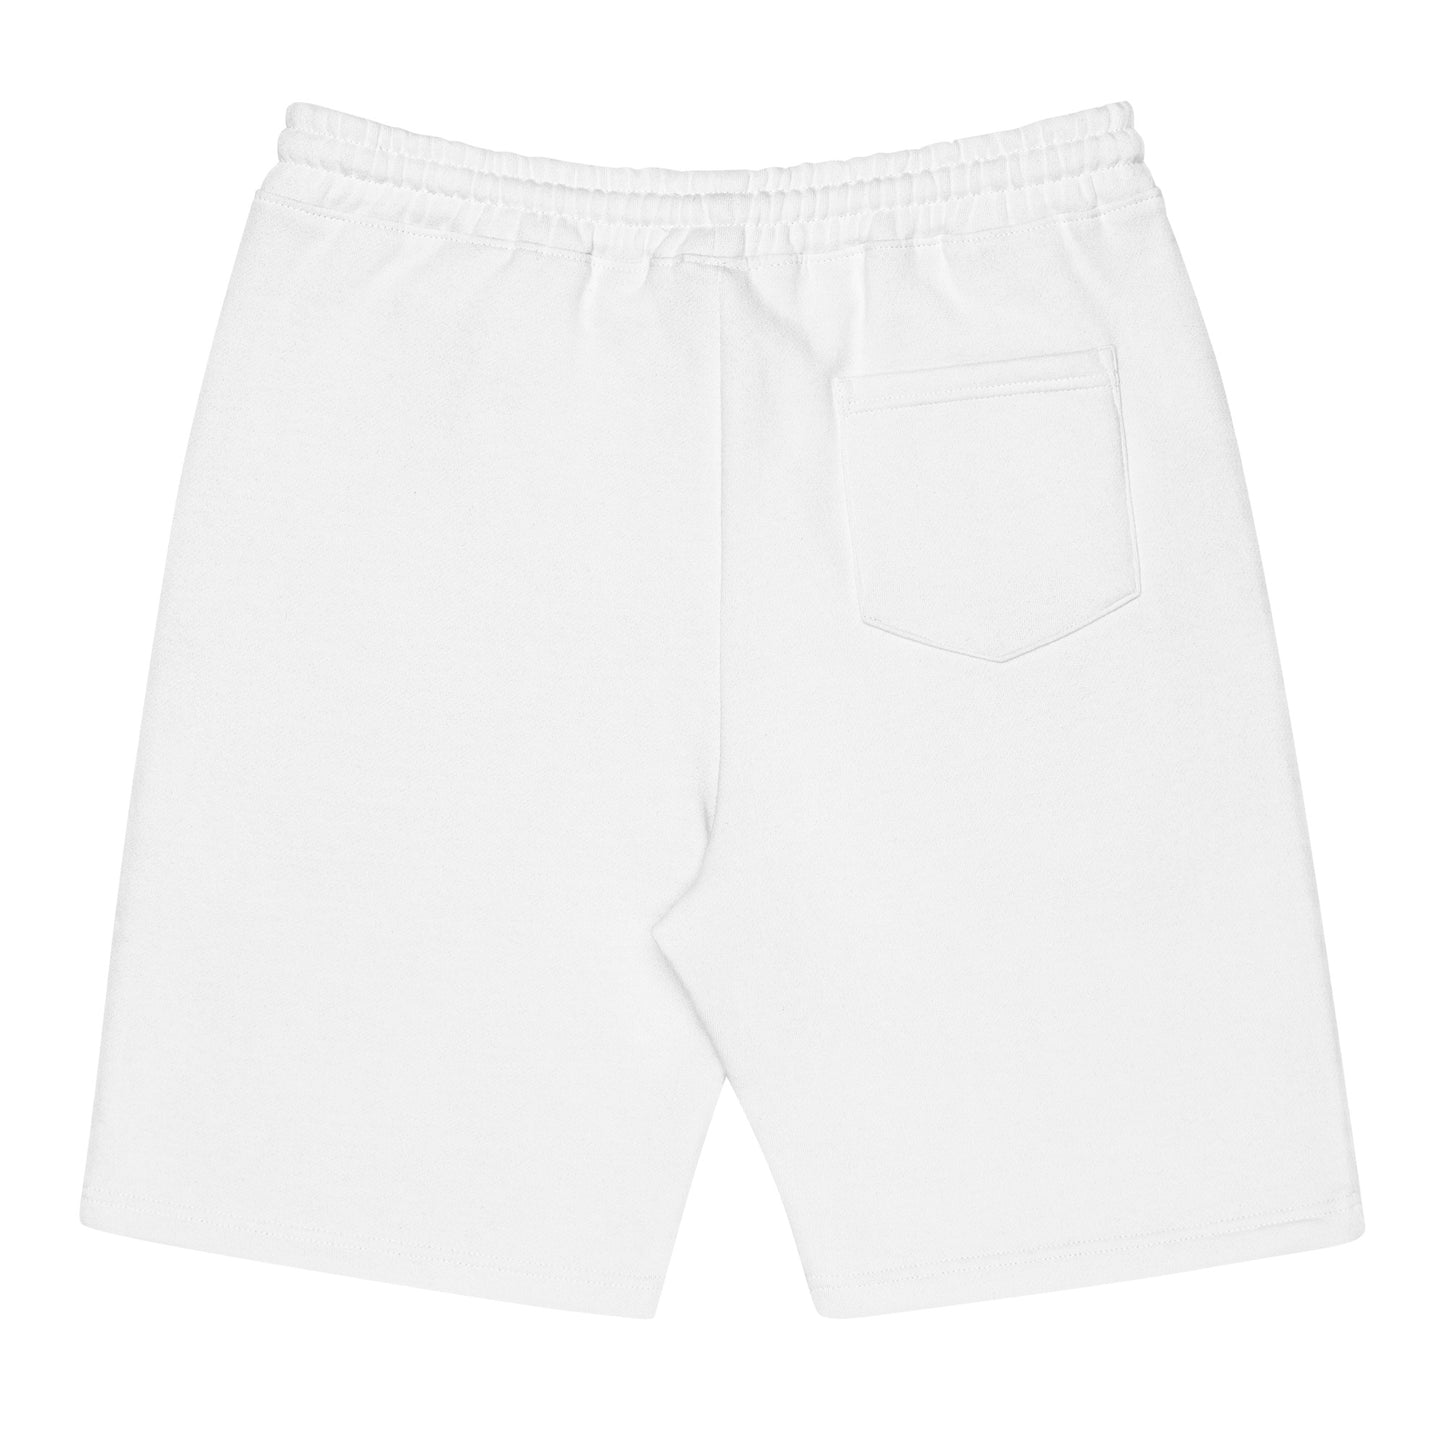 Blazers Unisex Fleece Shorts